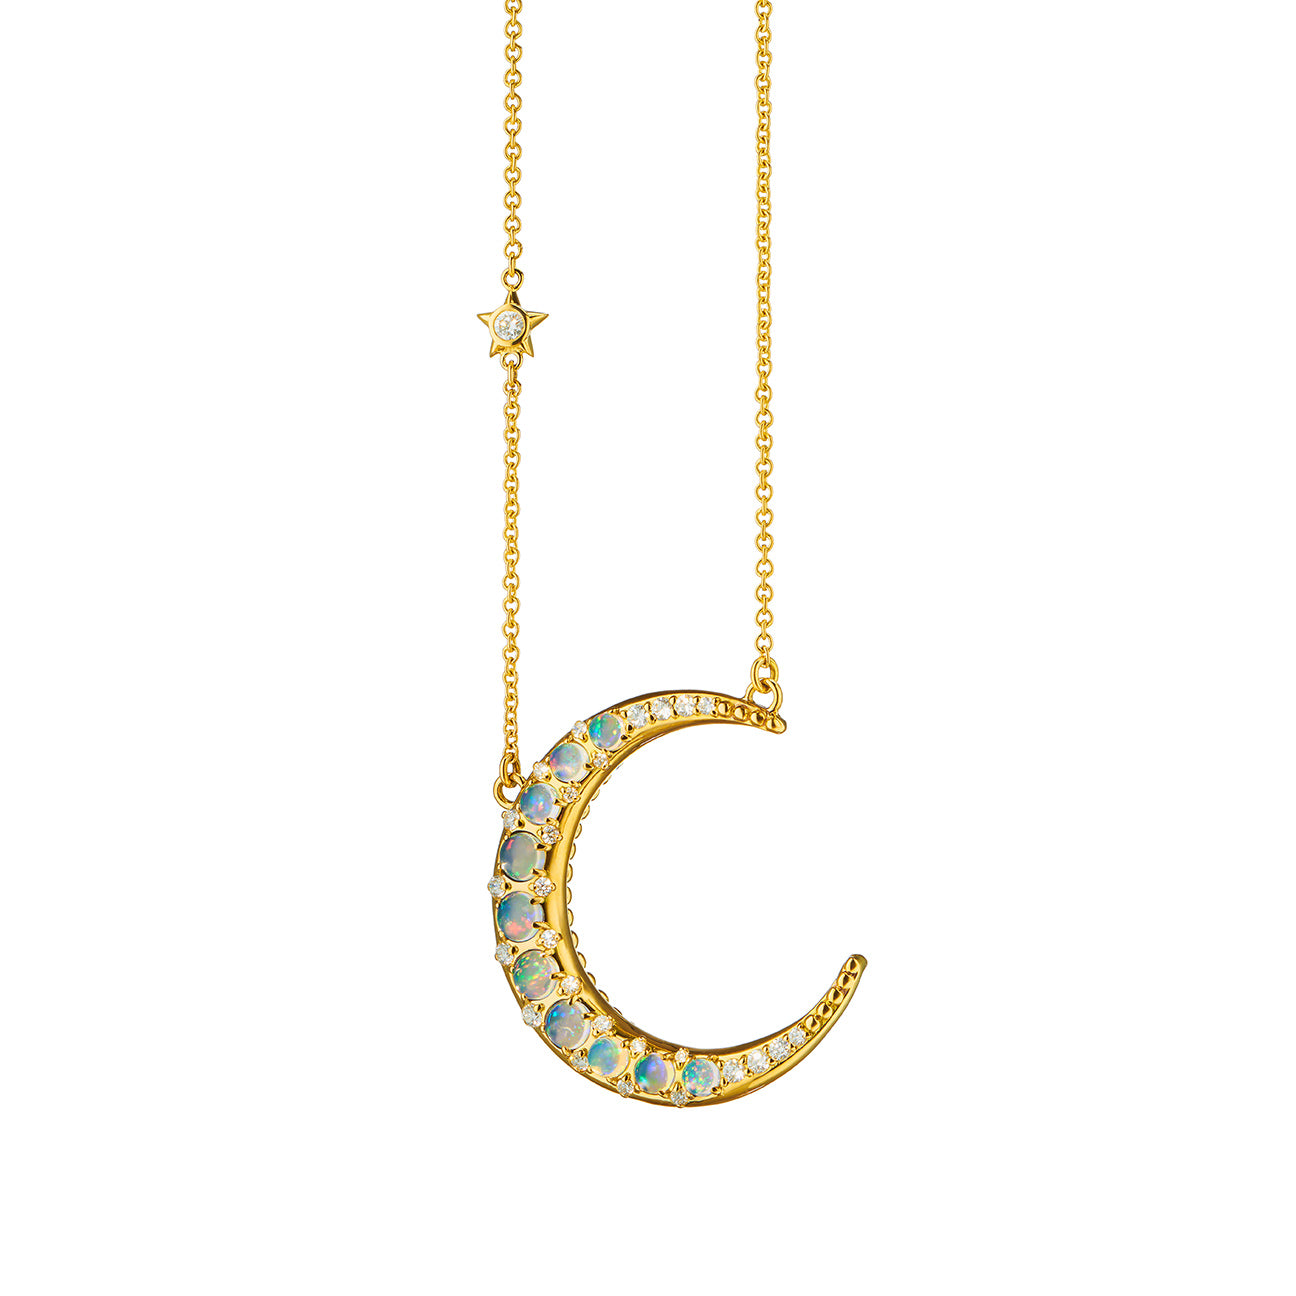 Blue Opal Moon Necklace – Super Silver